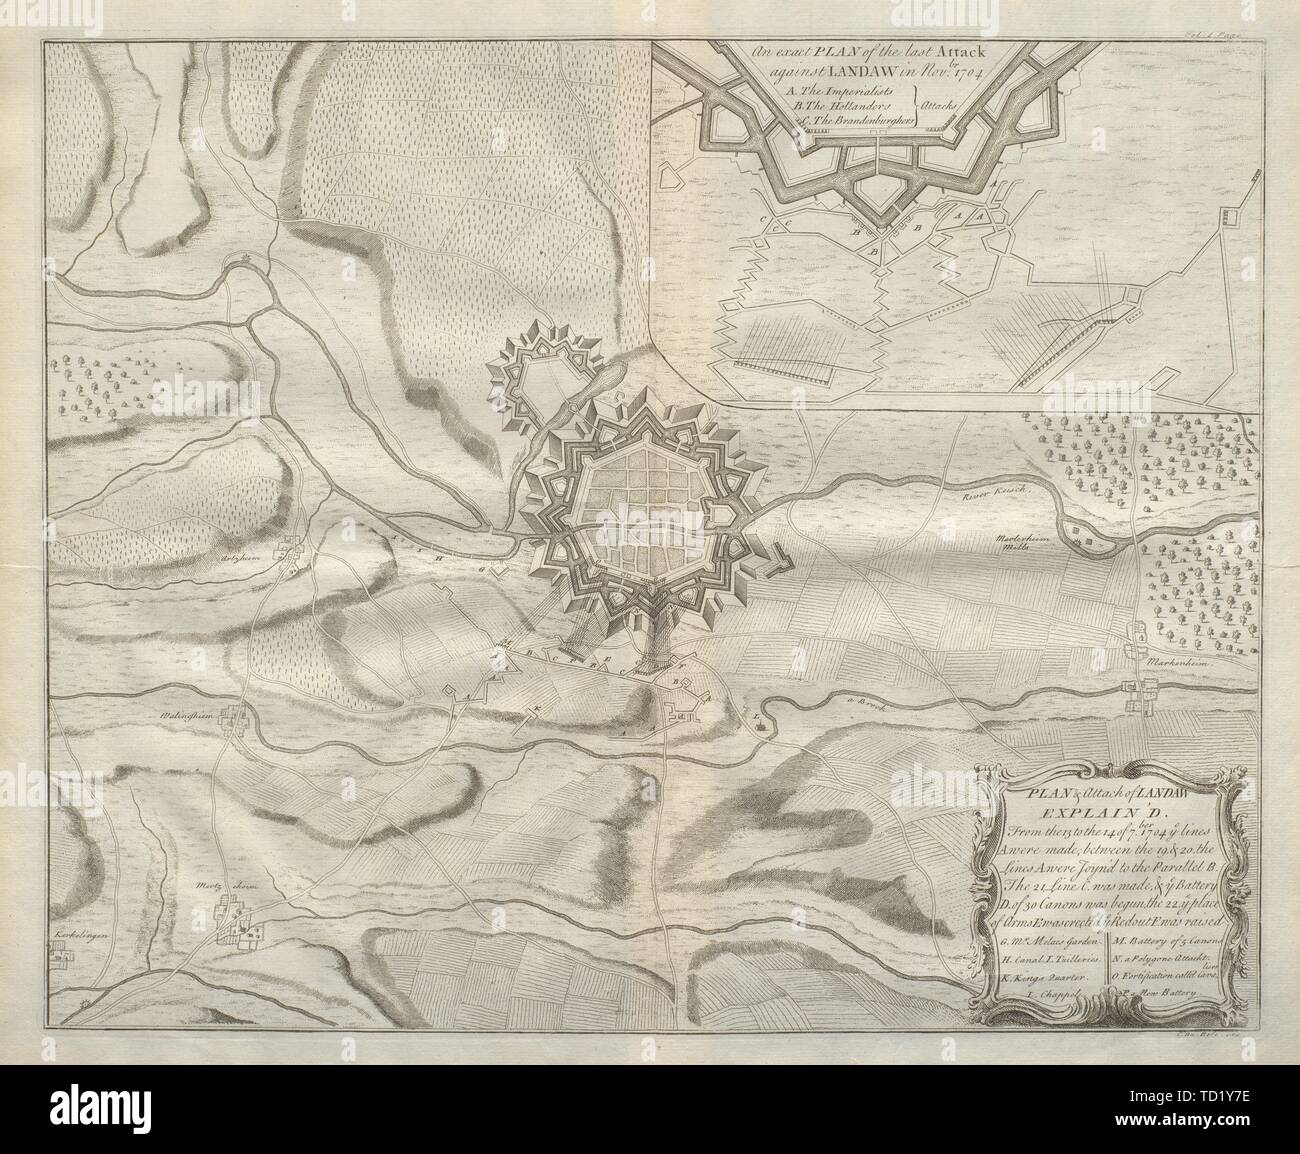 Piano di attacco di Landaw. Landau, Renania-Palatinato, 1704. DU BOSC 1736 mappa Foto Stock